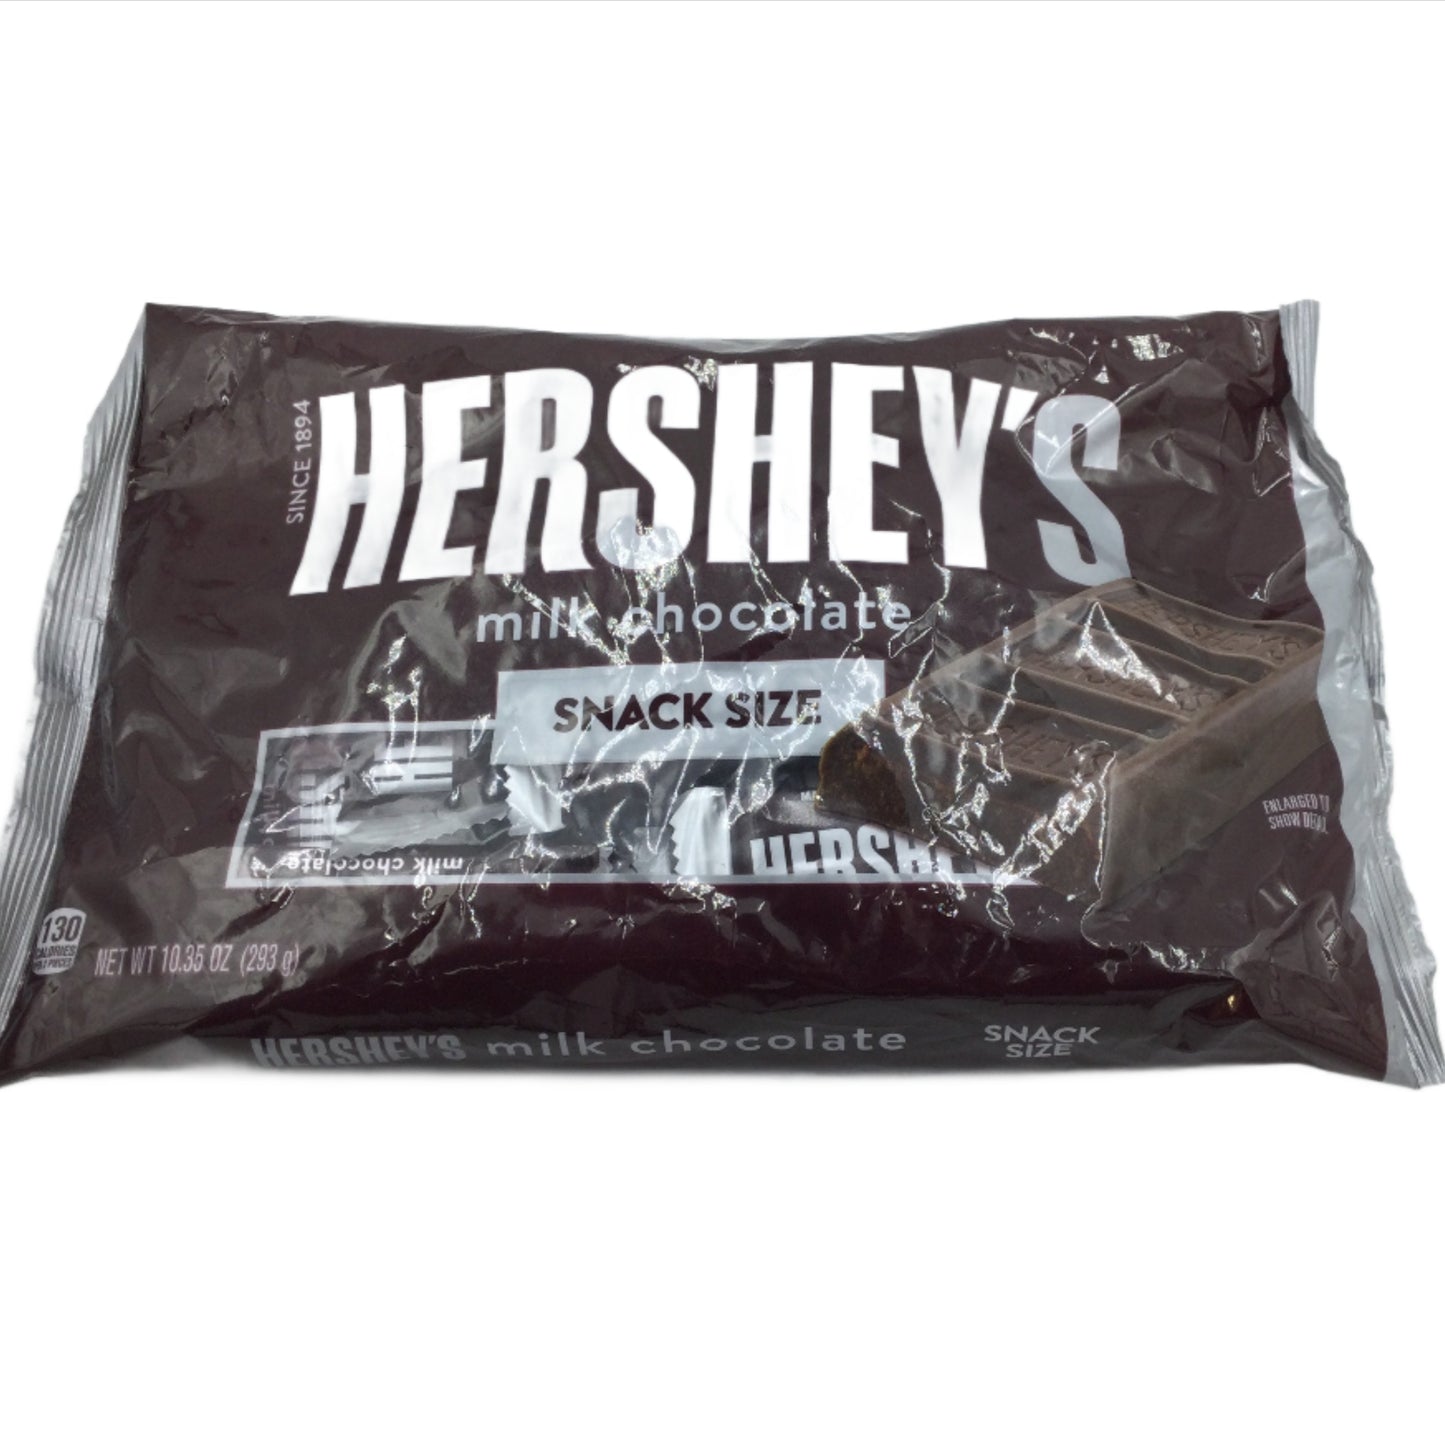 Chocolate, Hershey's Milk Chocolate Snack Size Candy Bars- 10.35 oz bag